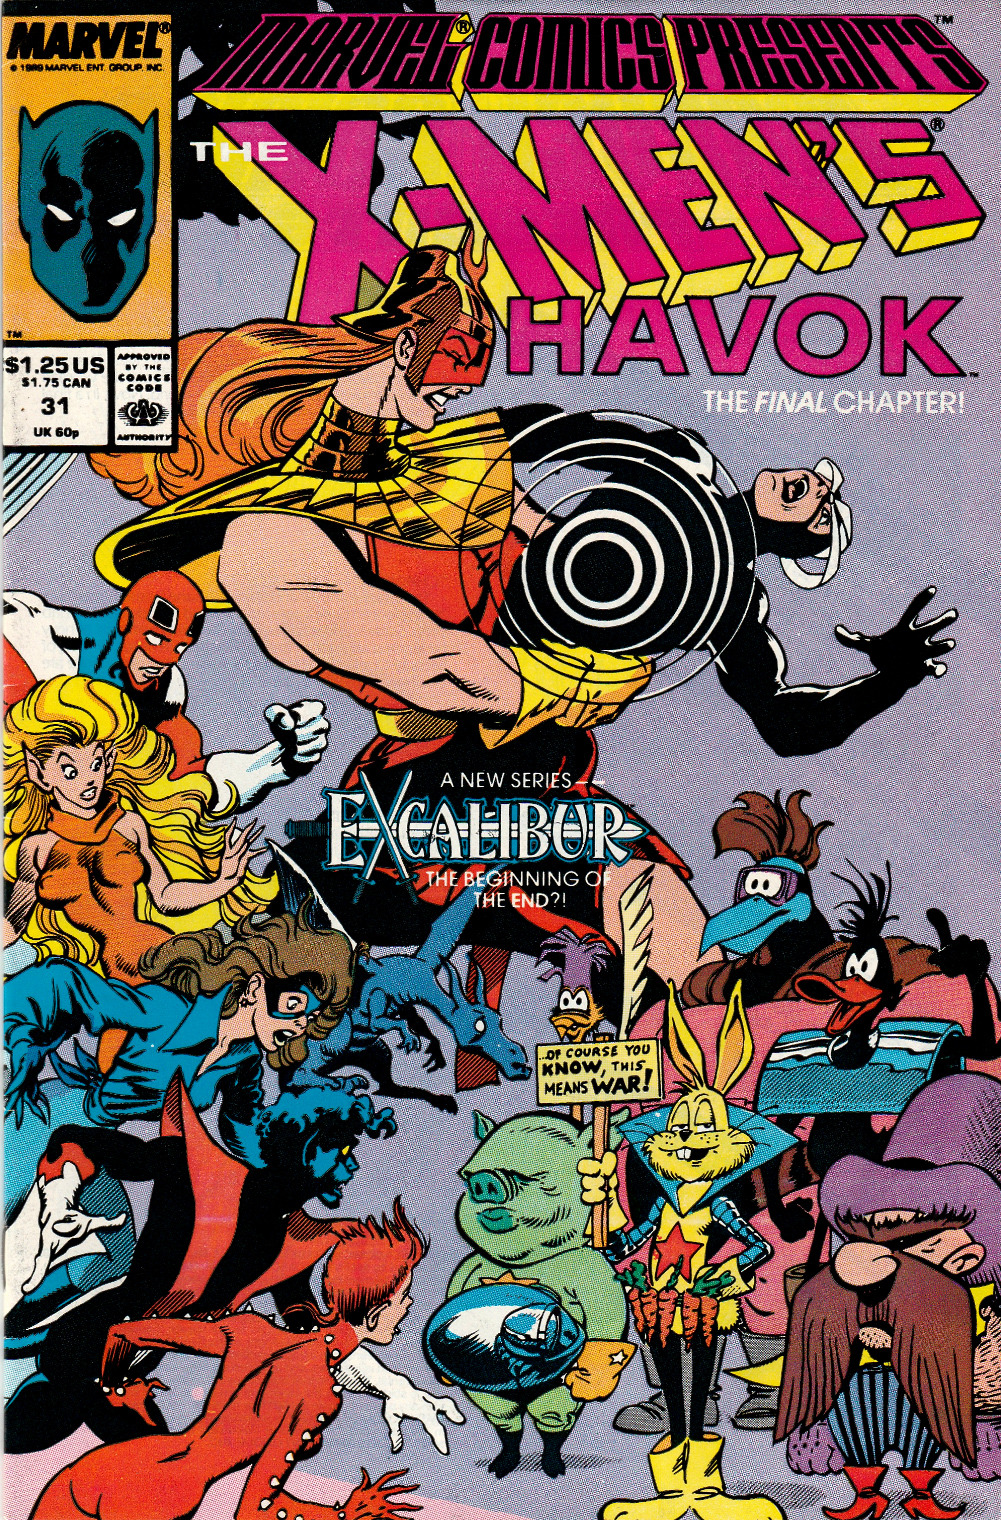 Marvel Comics Presents Havok, No. 38 (Marvel Comics, 1989). Cover art by Jon Bogdanove